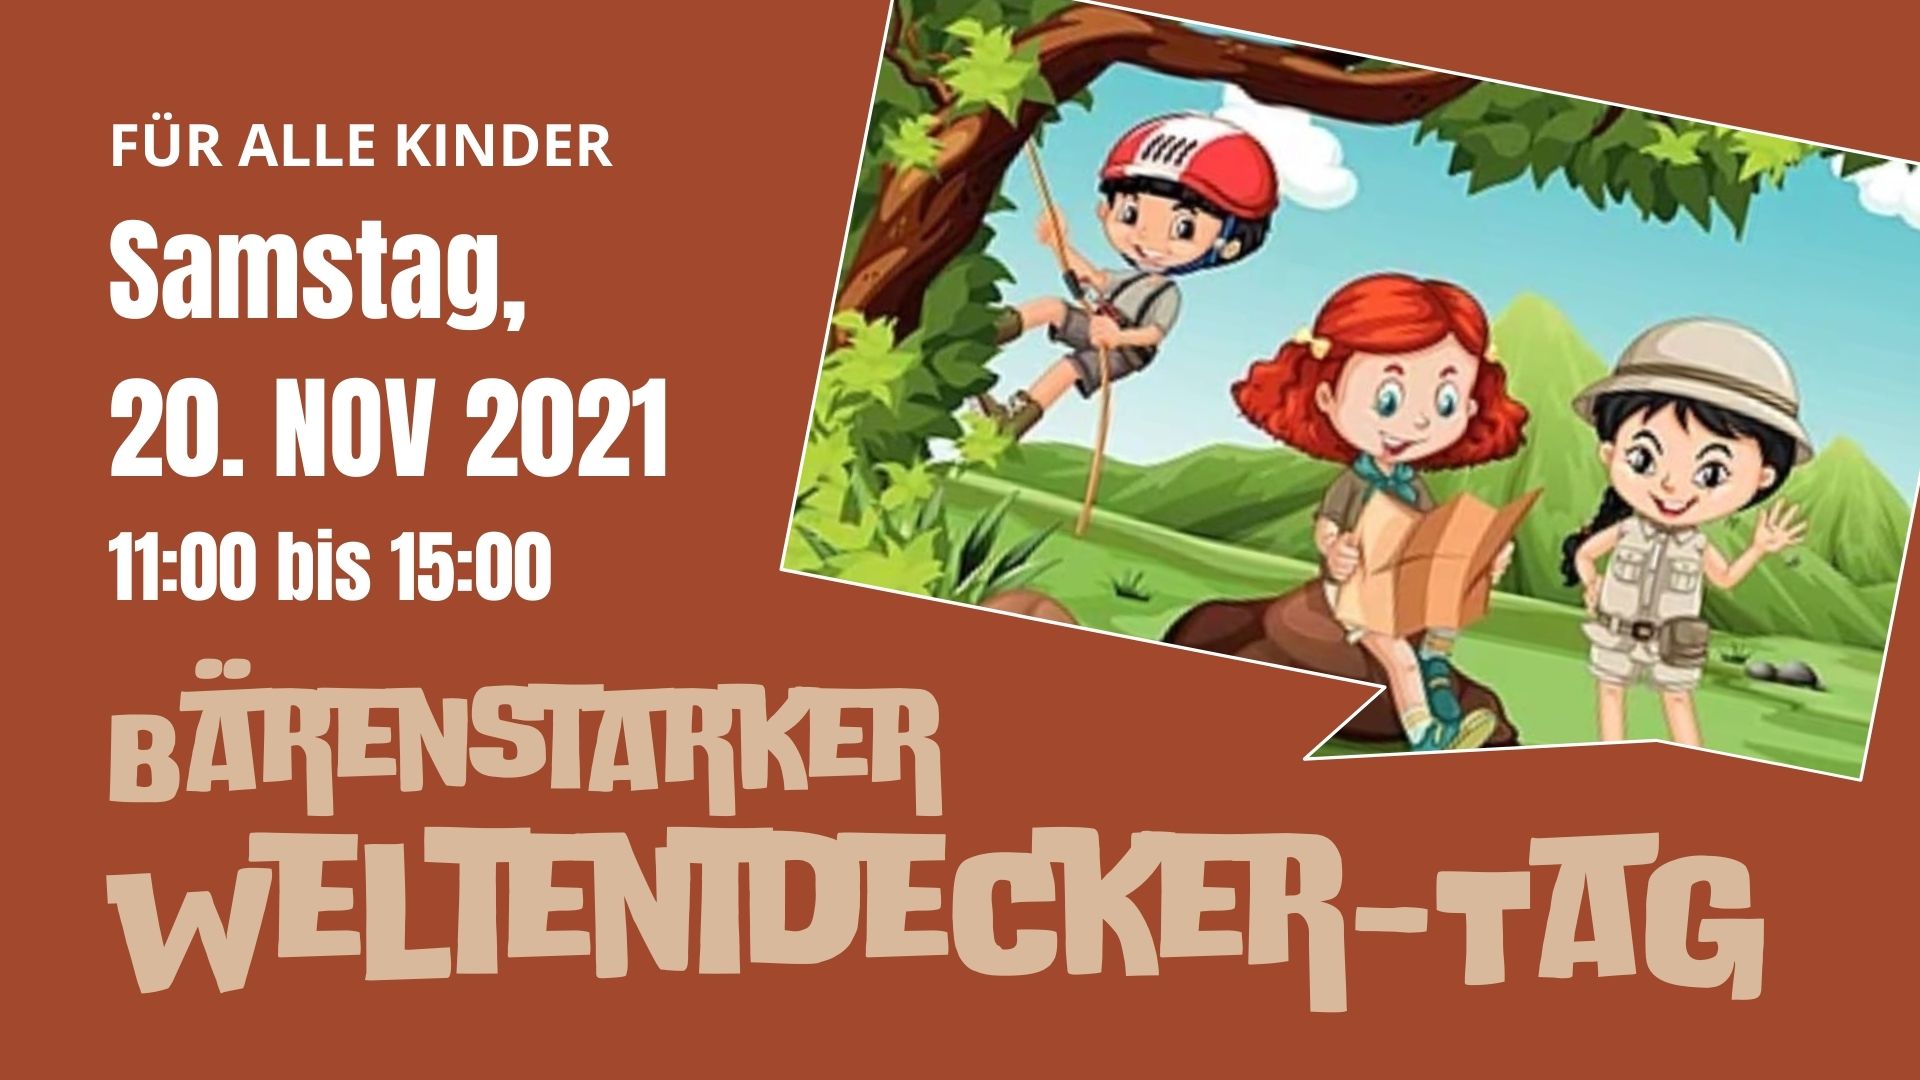 Featured image for “Bärenstarker Weltentdecker-Tag”